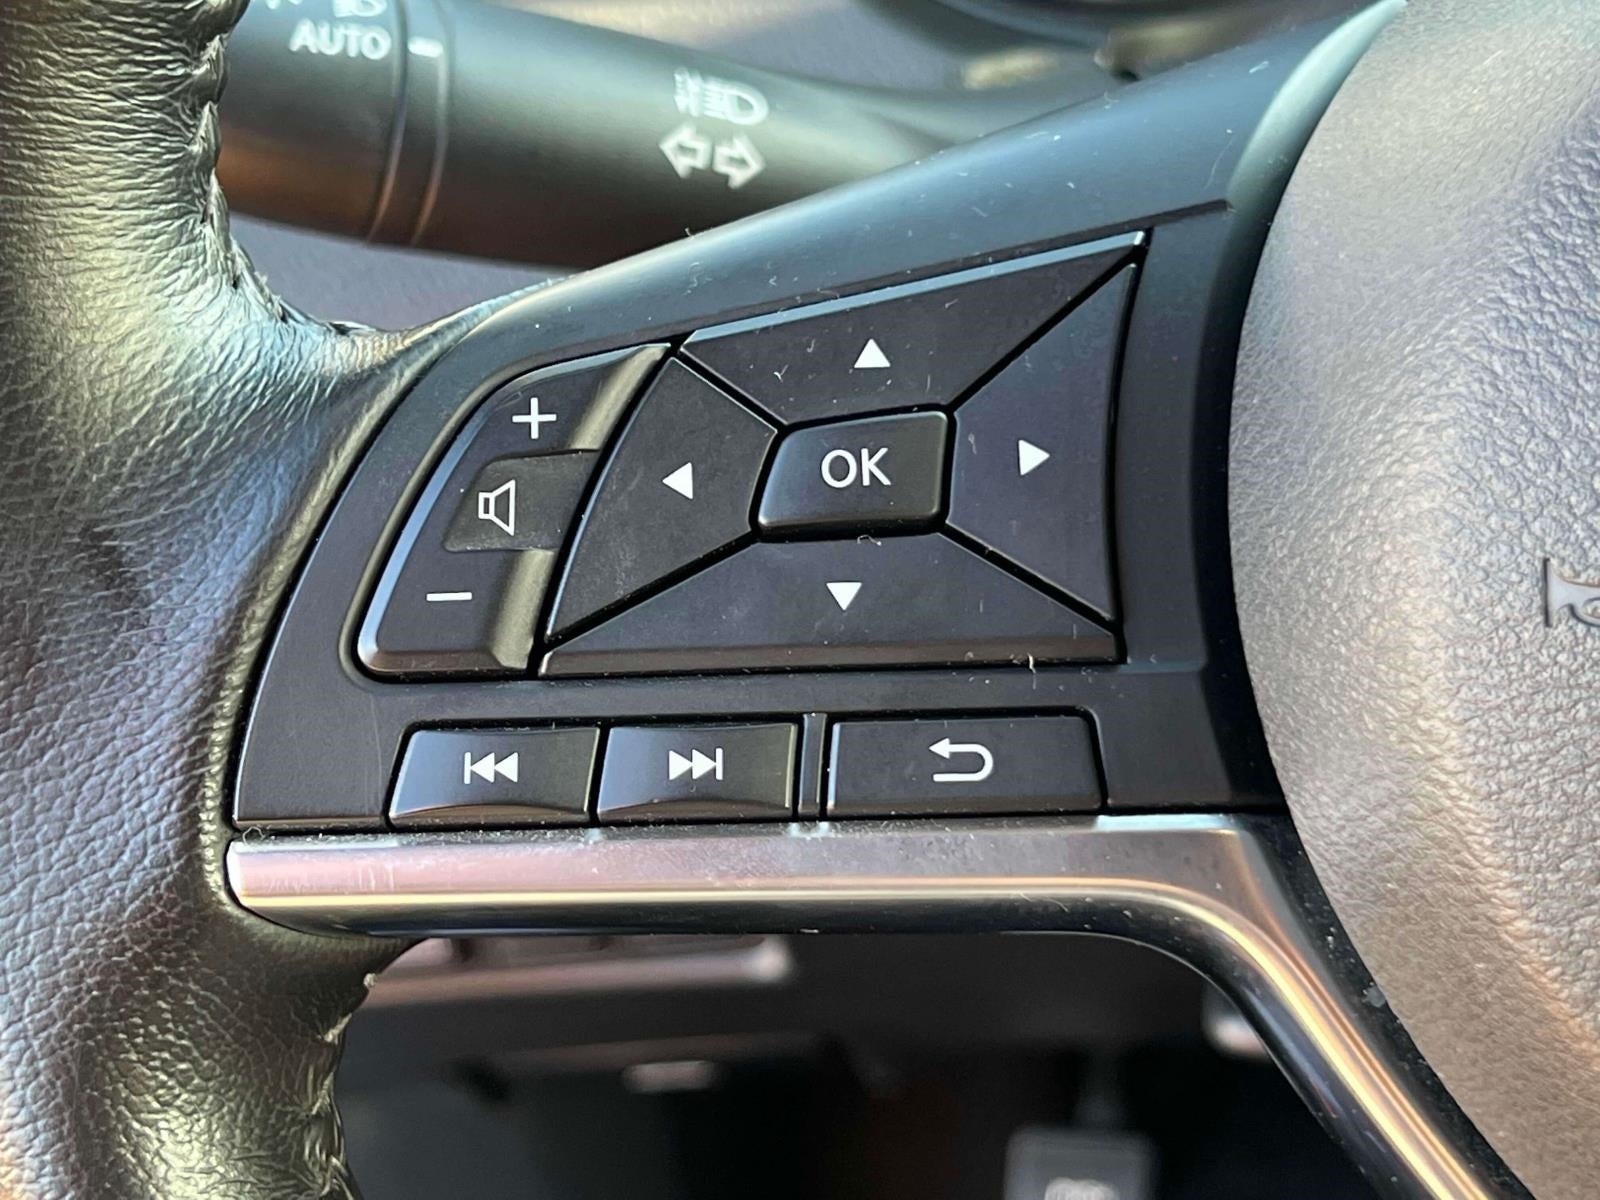 2019 Nissan Rogue AWD SV